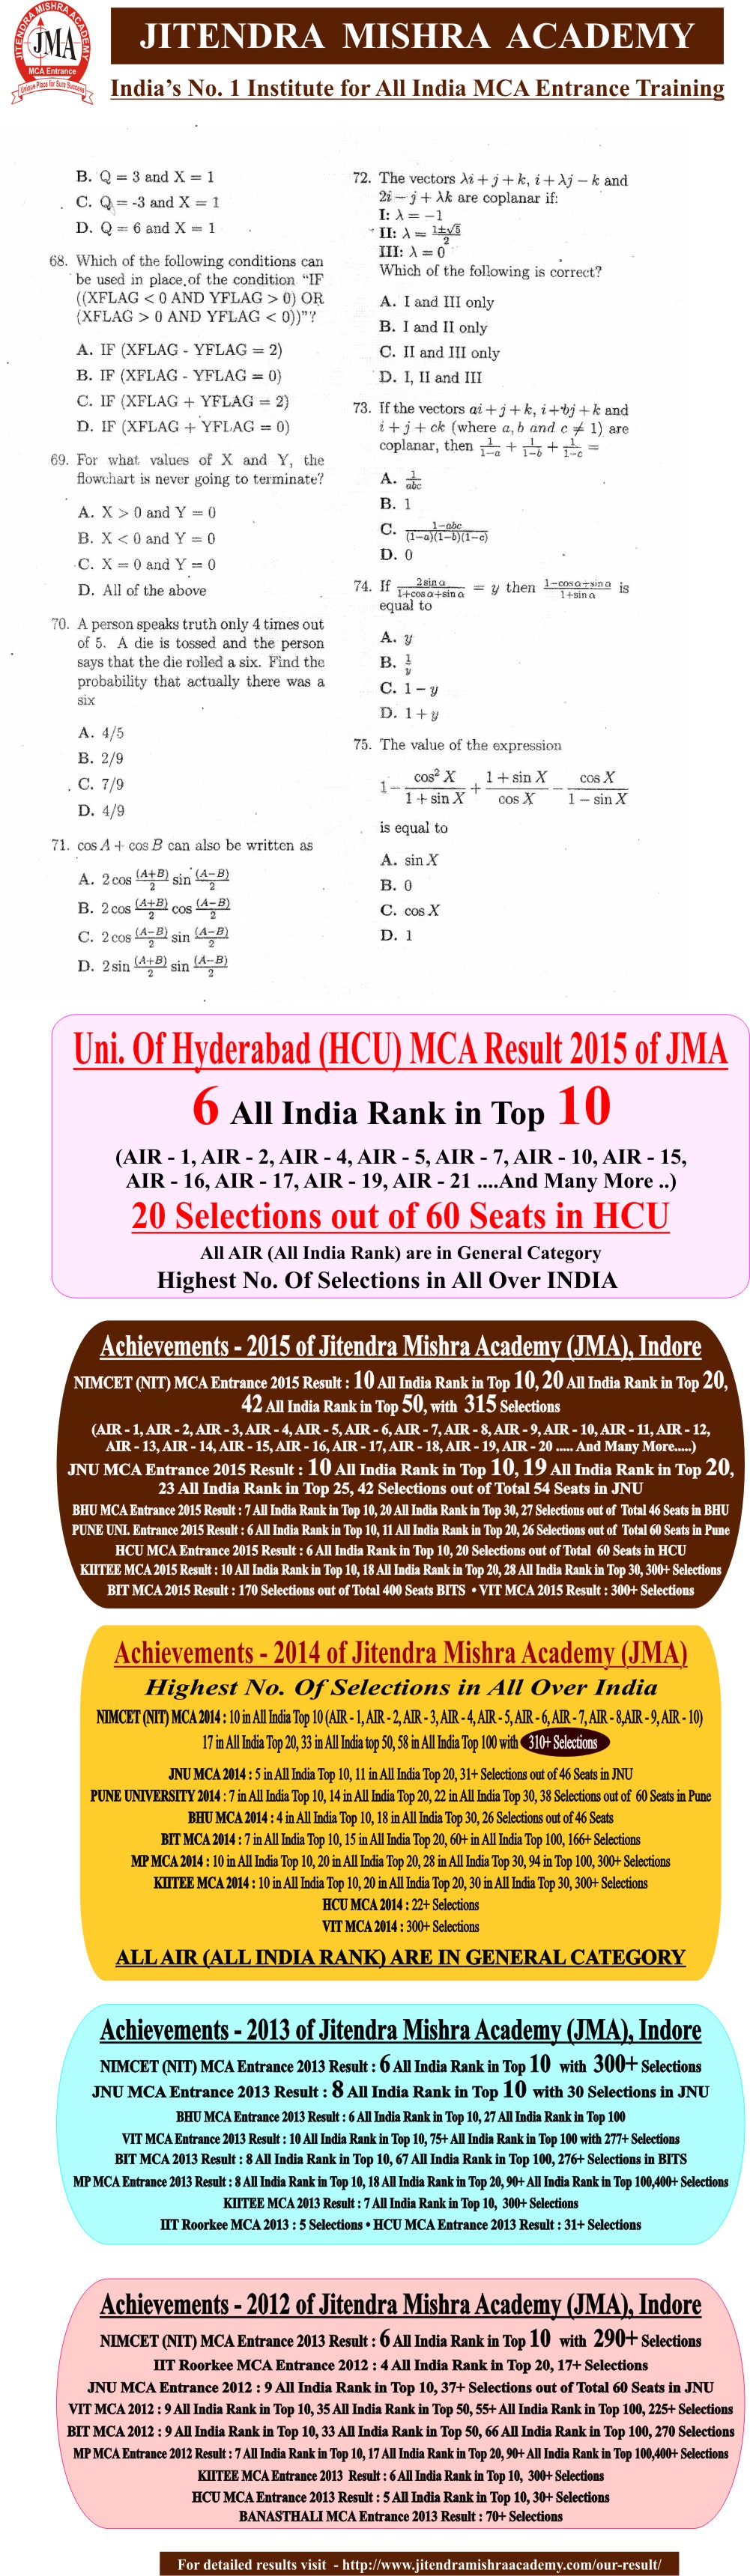 HCU - 2013 (LAST PAGE)